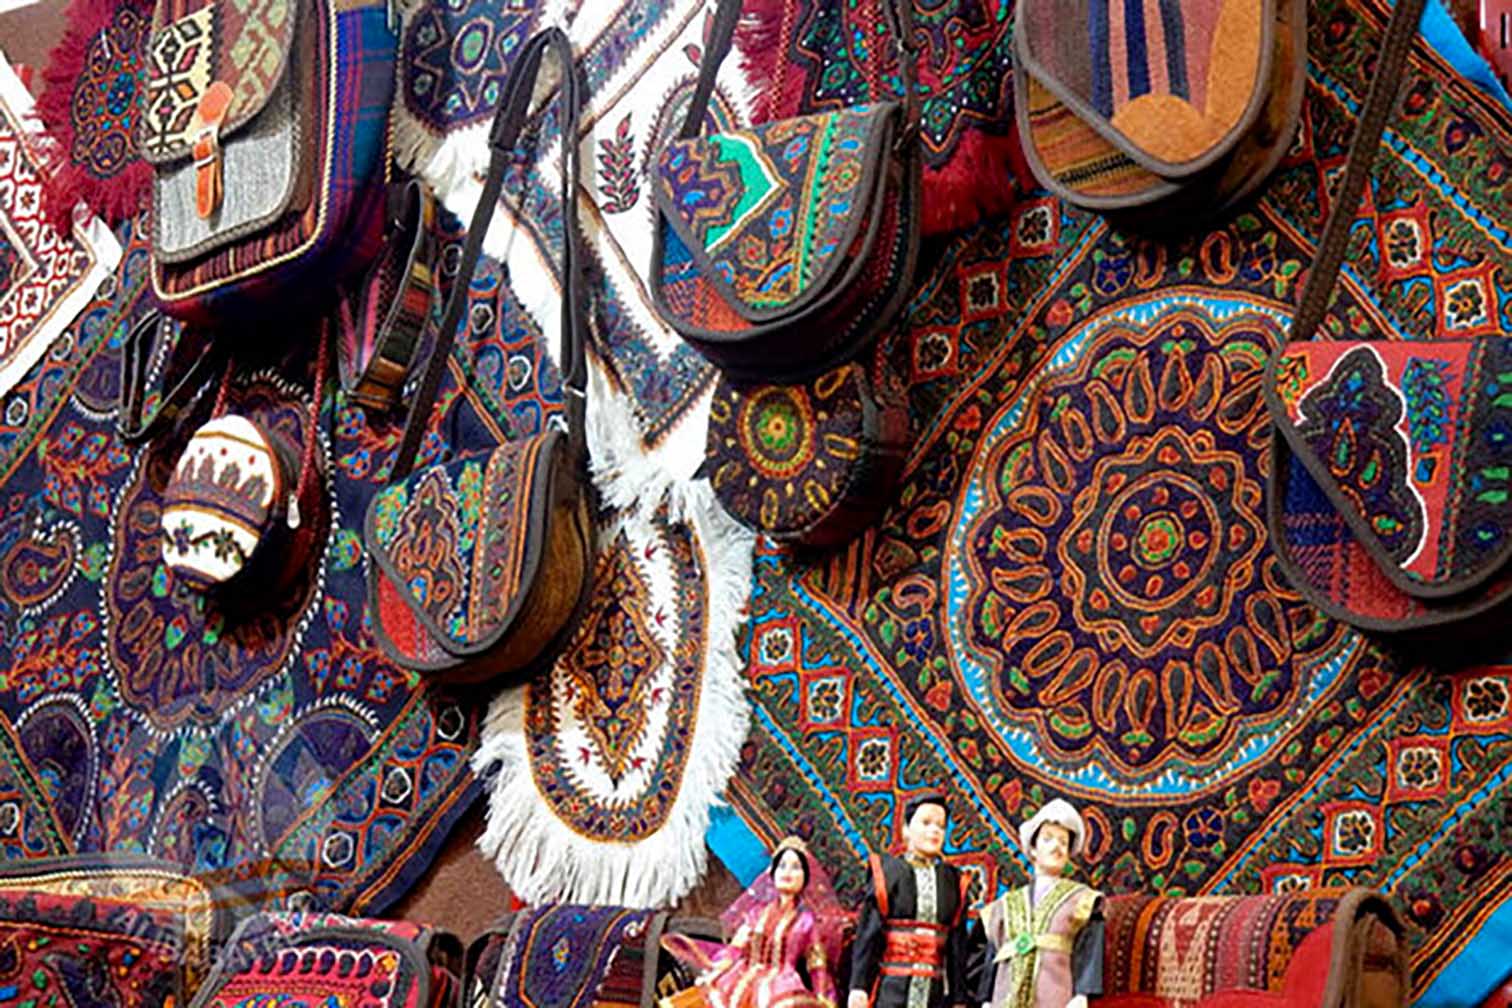 patteh kerman - The history of bazaars in Iran